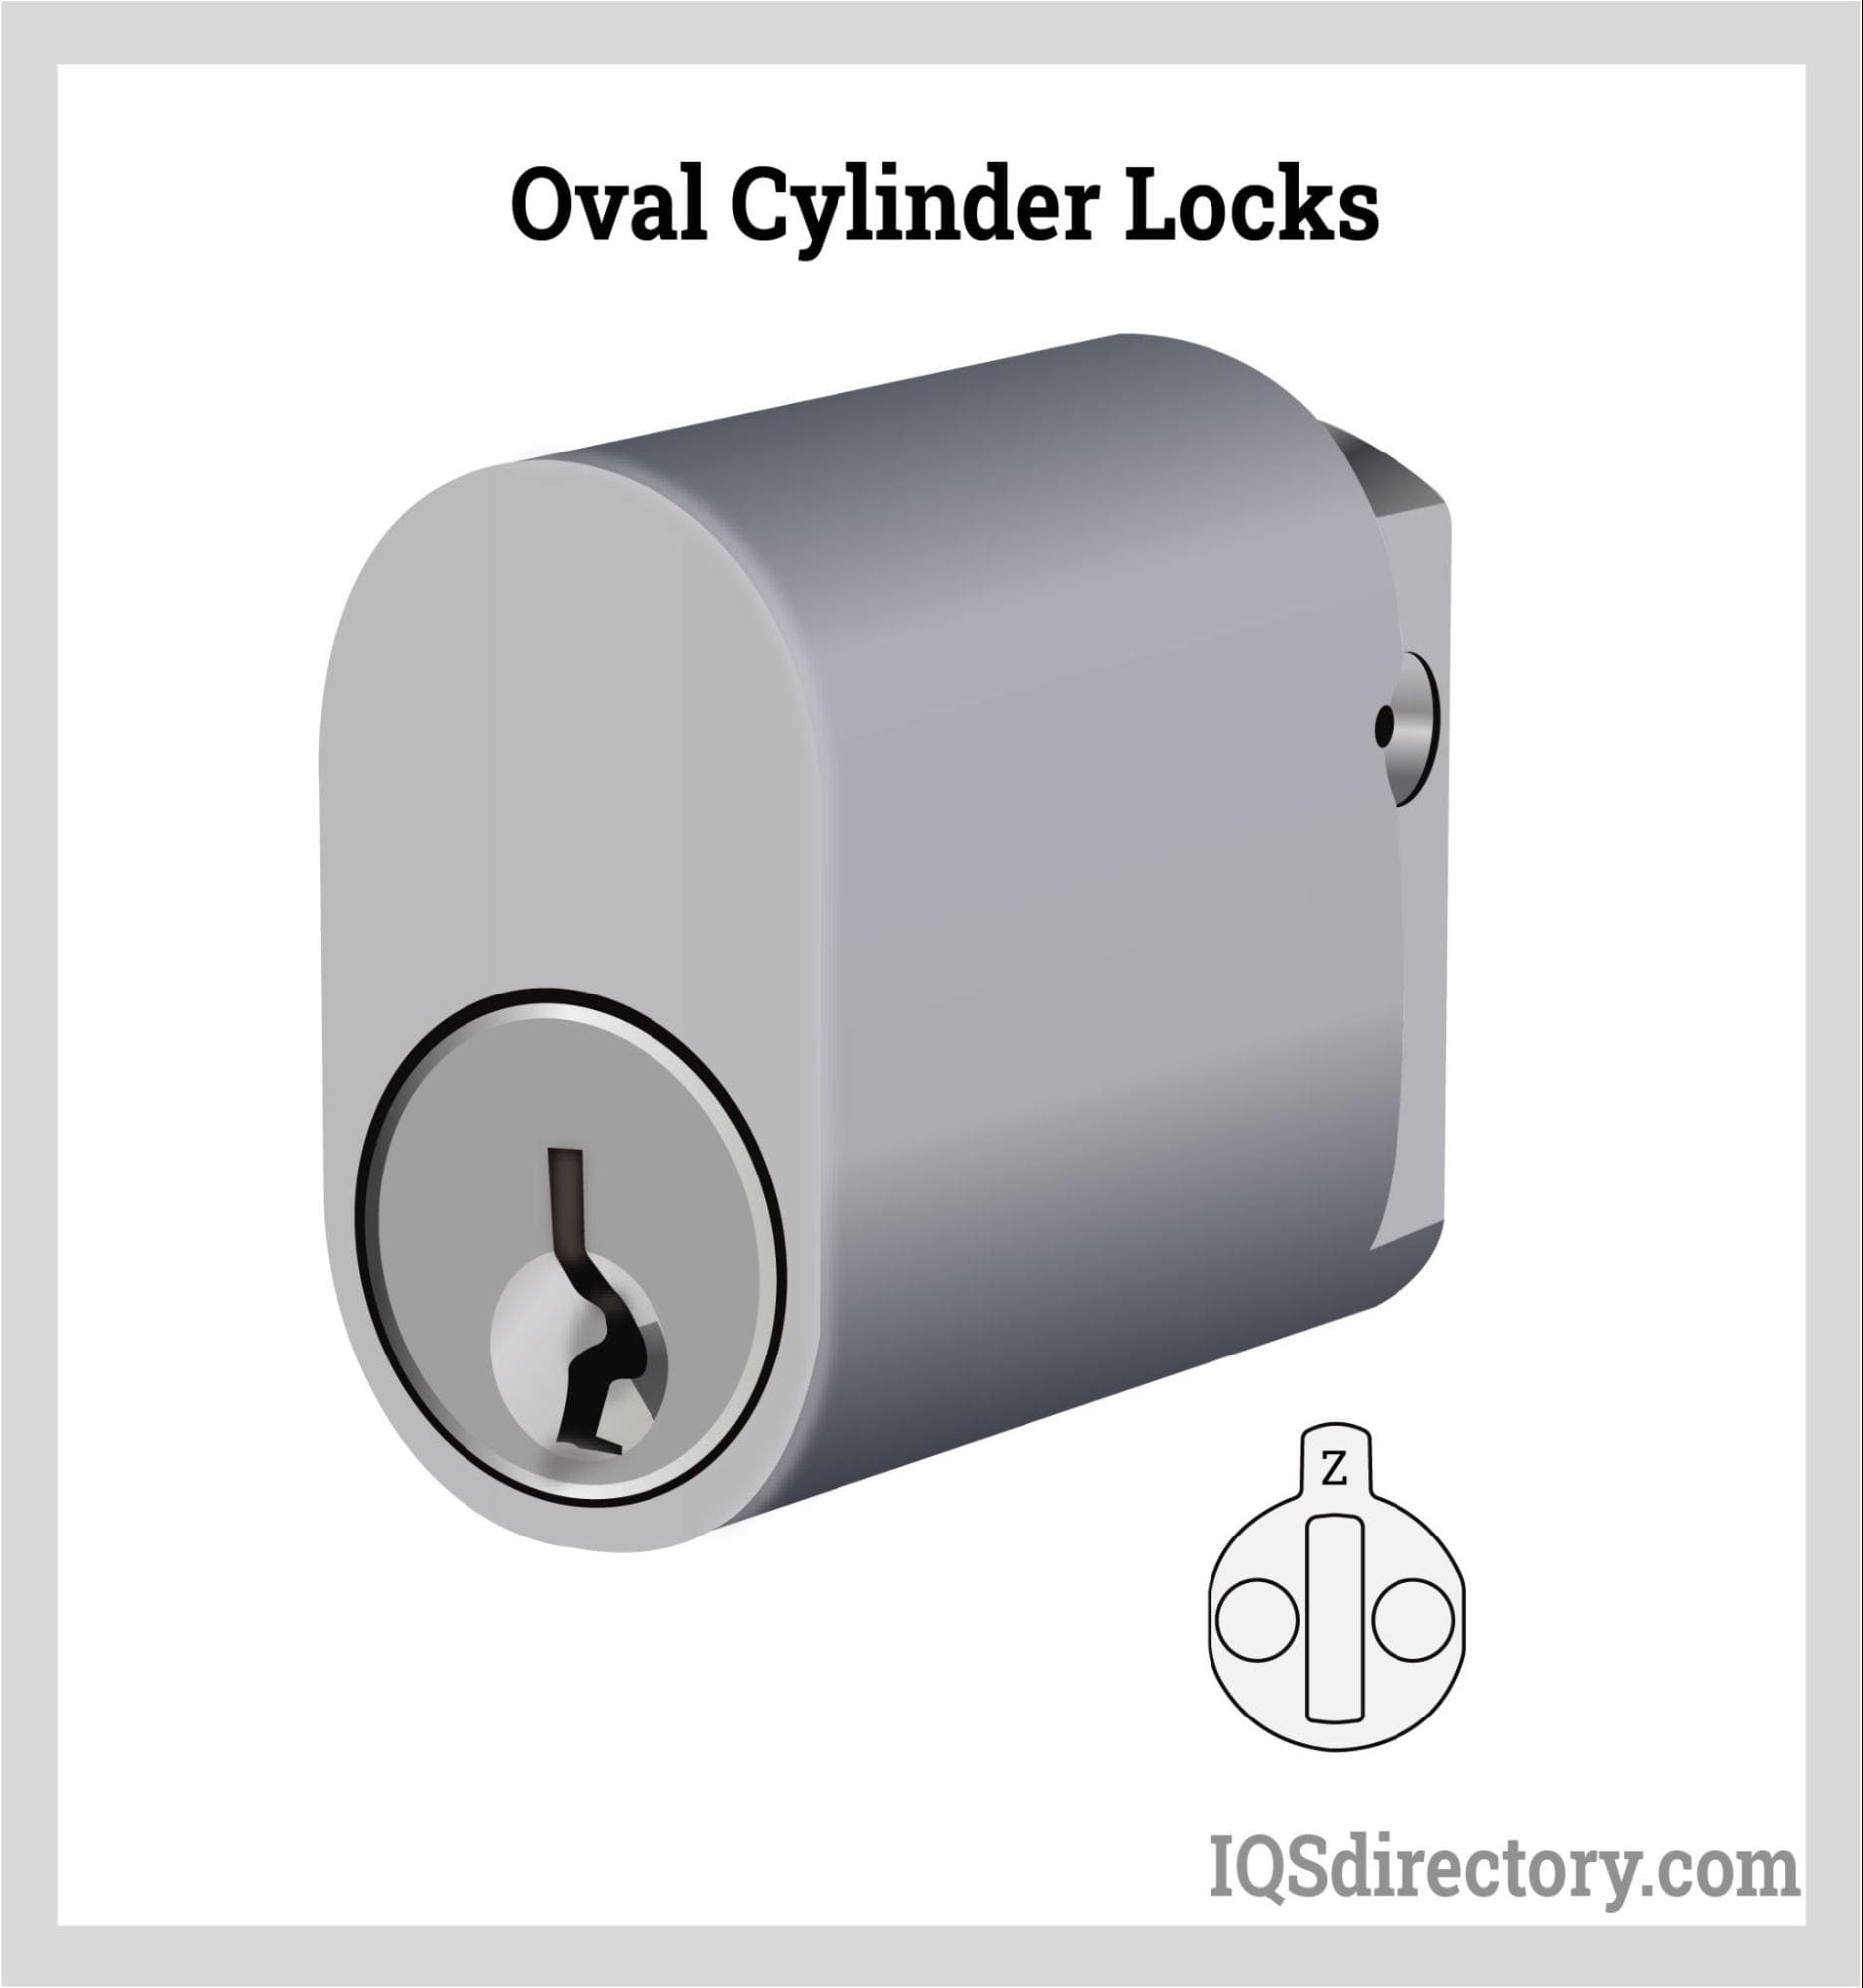 Oval Cylinder Locks